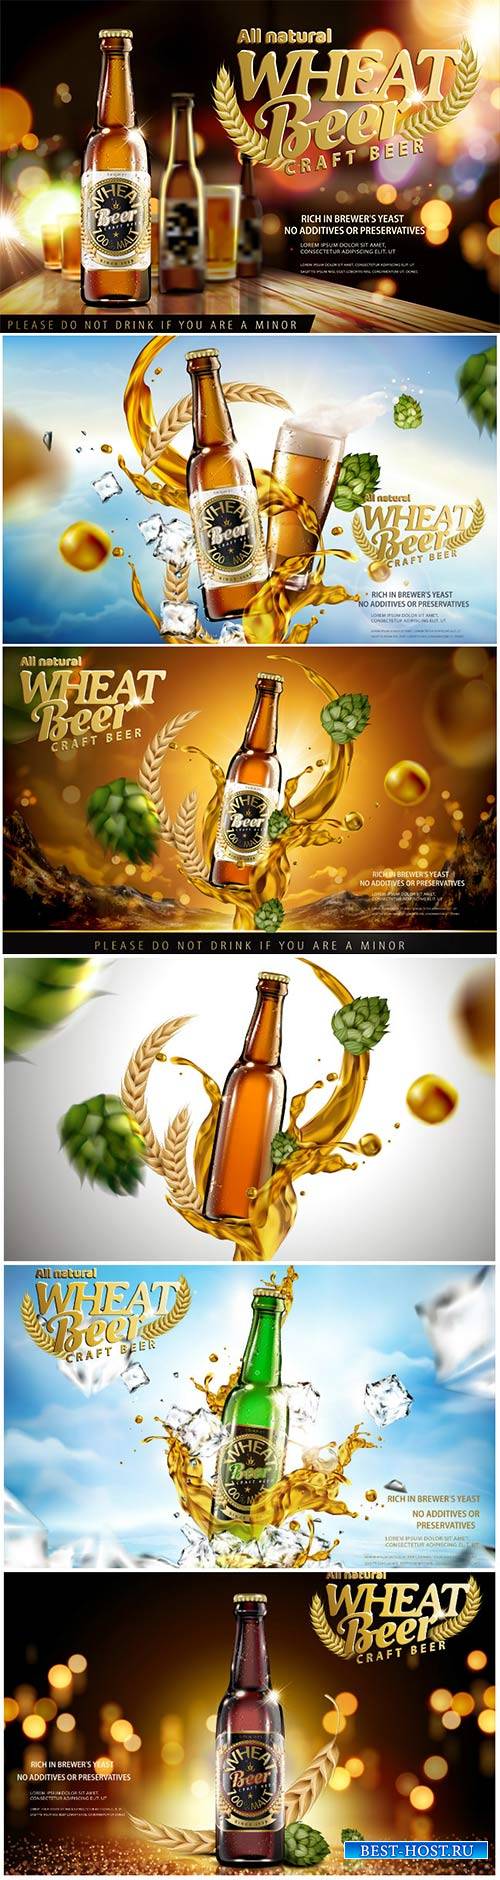 Beer vector poster ads on bokeh night bar background in 3d illustration